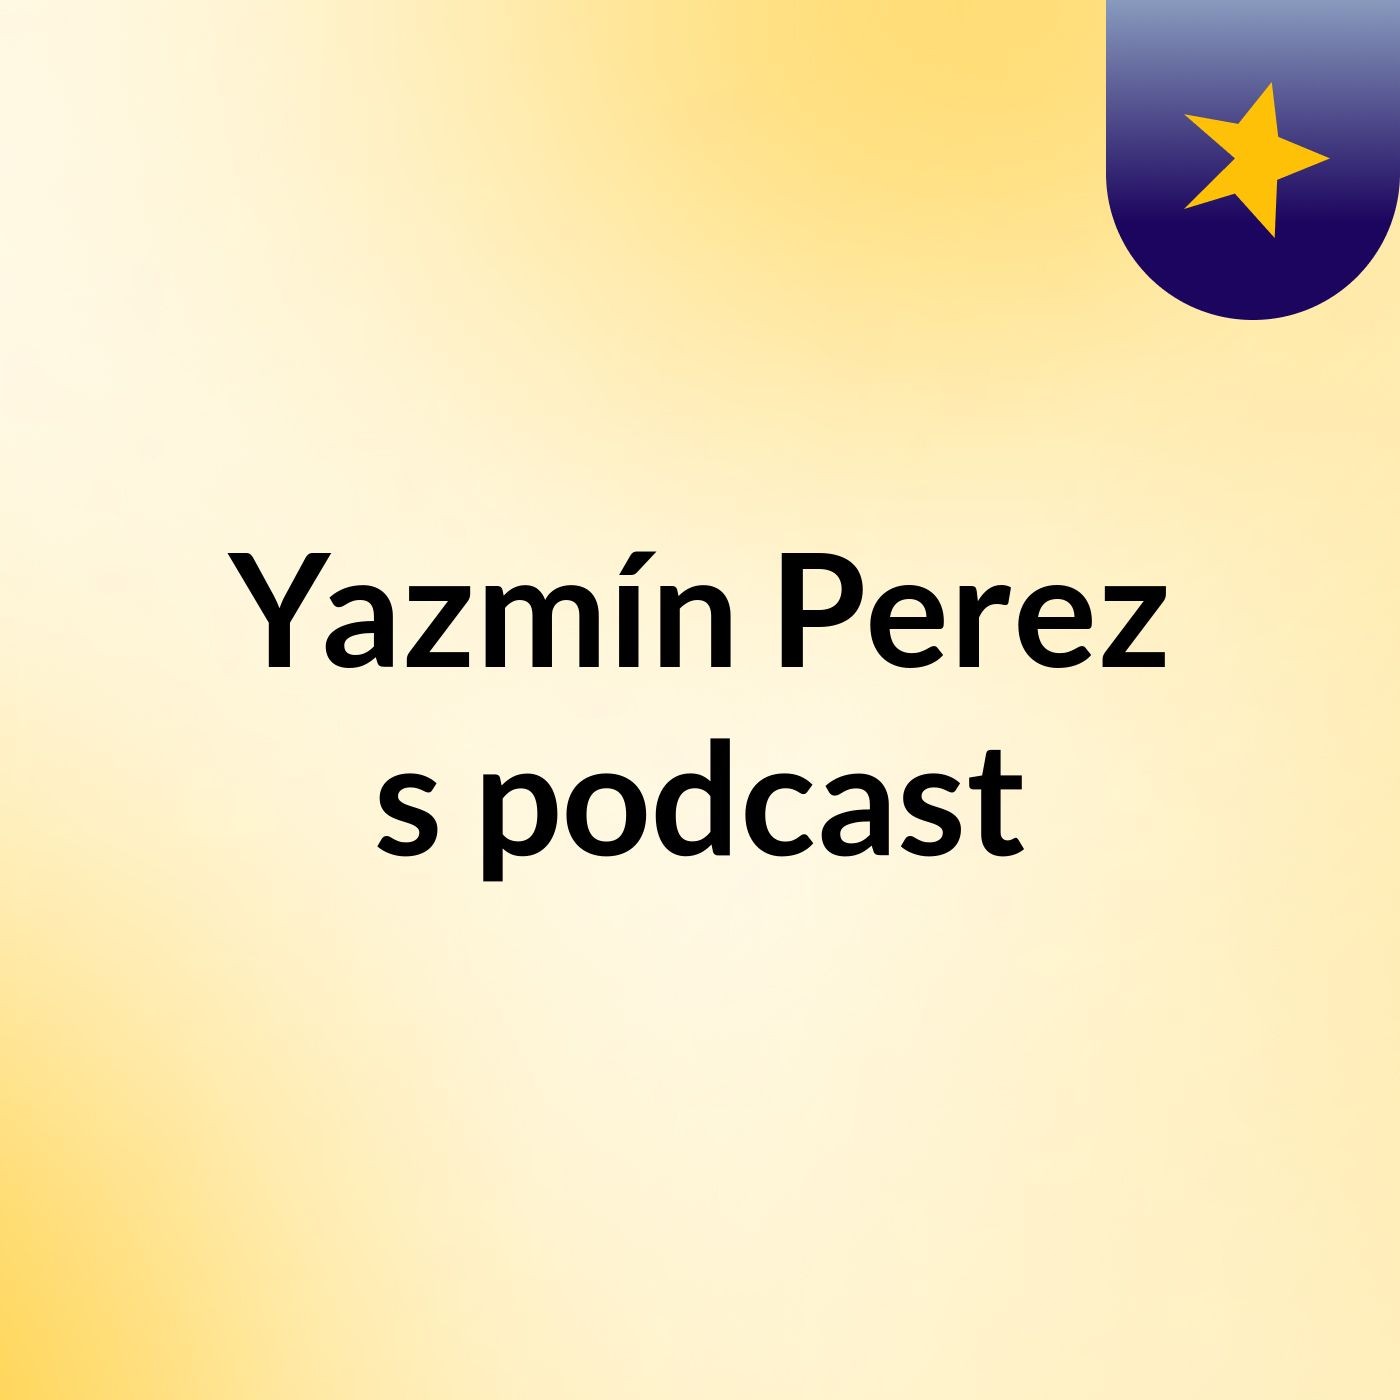 Yazmín Perez's podcast